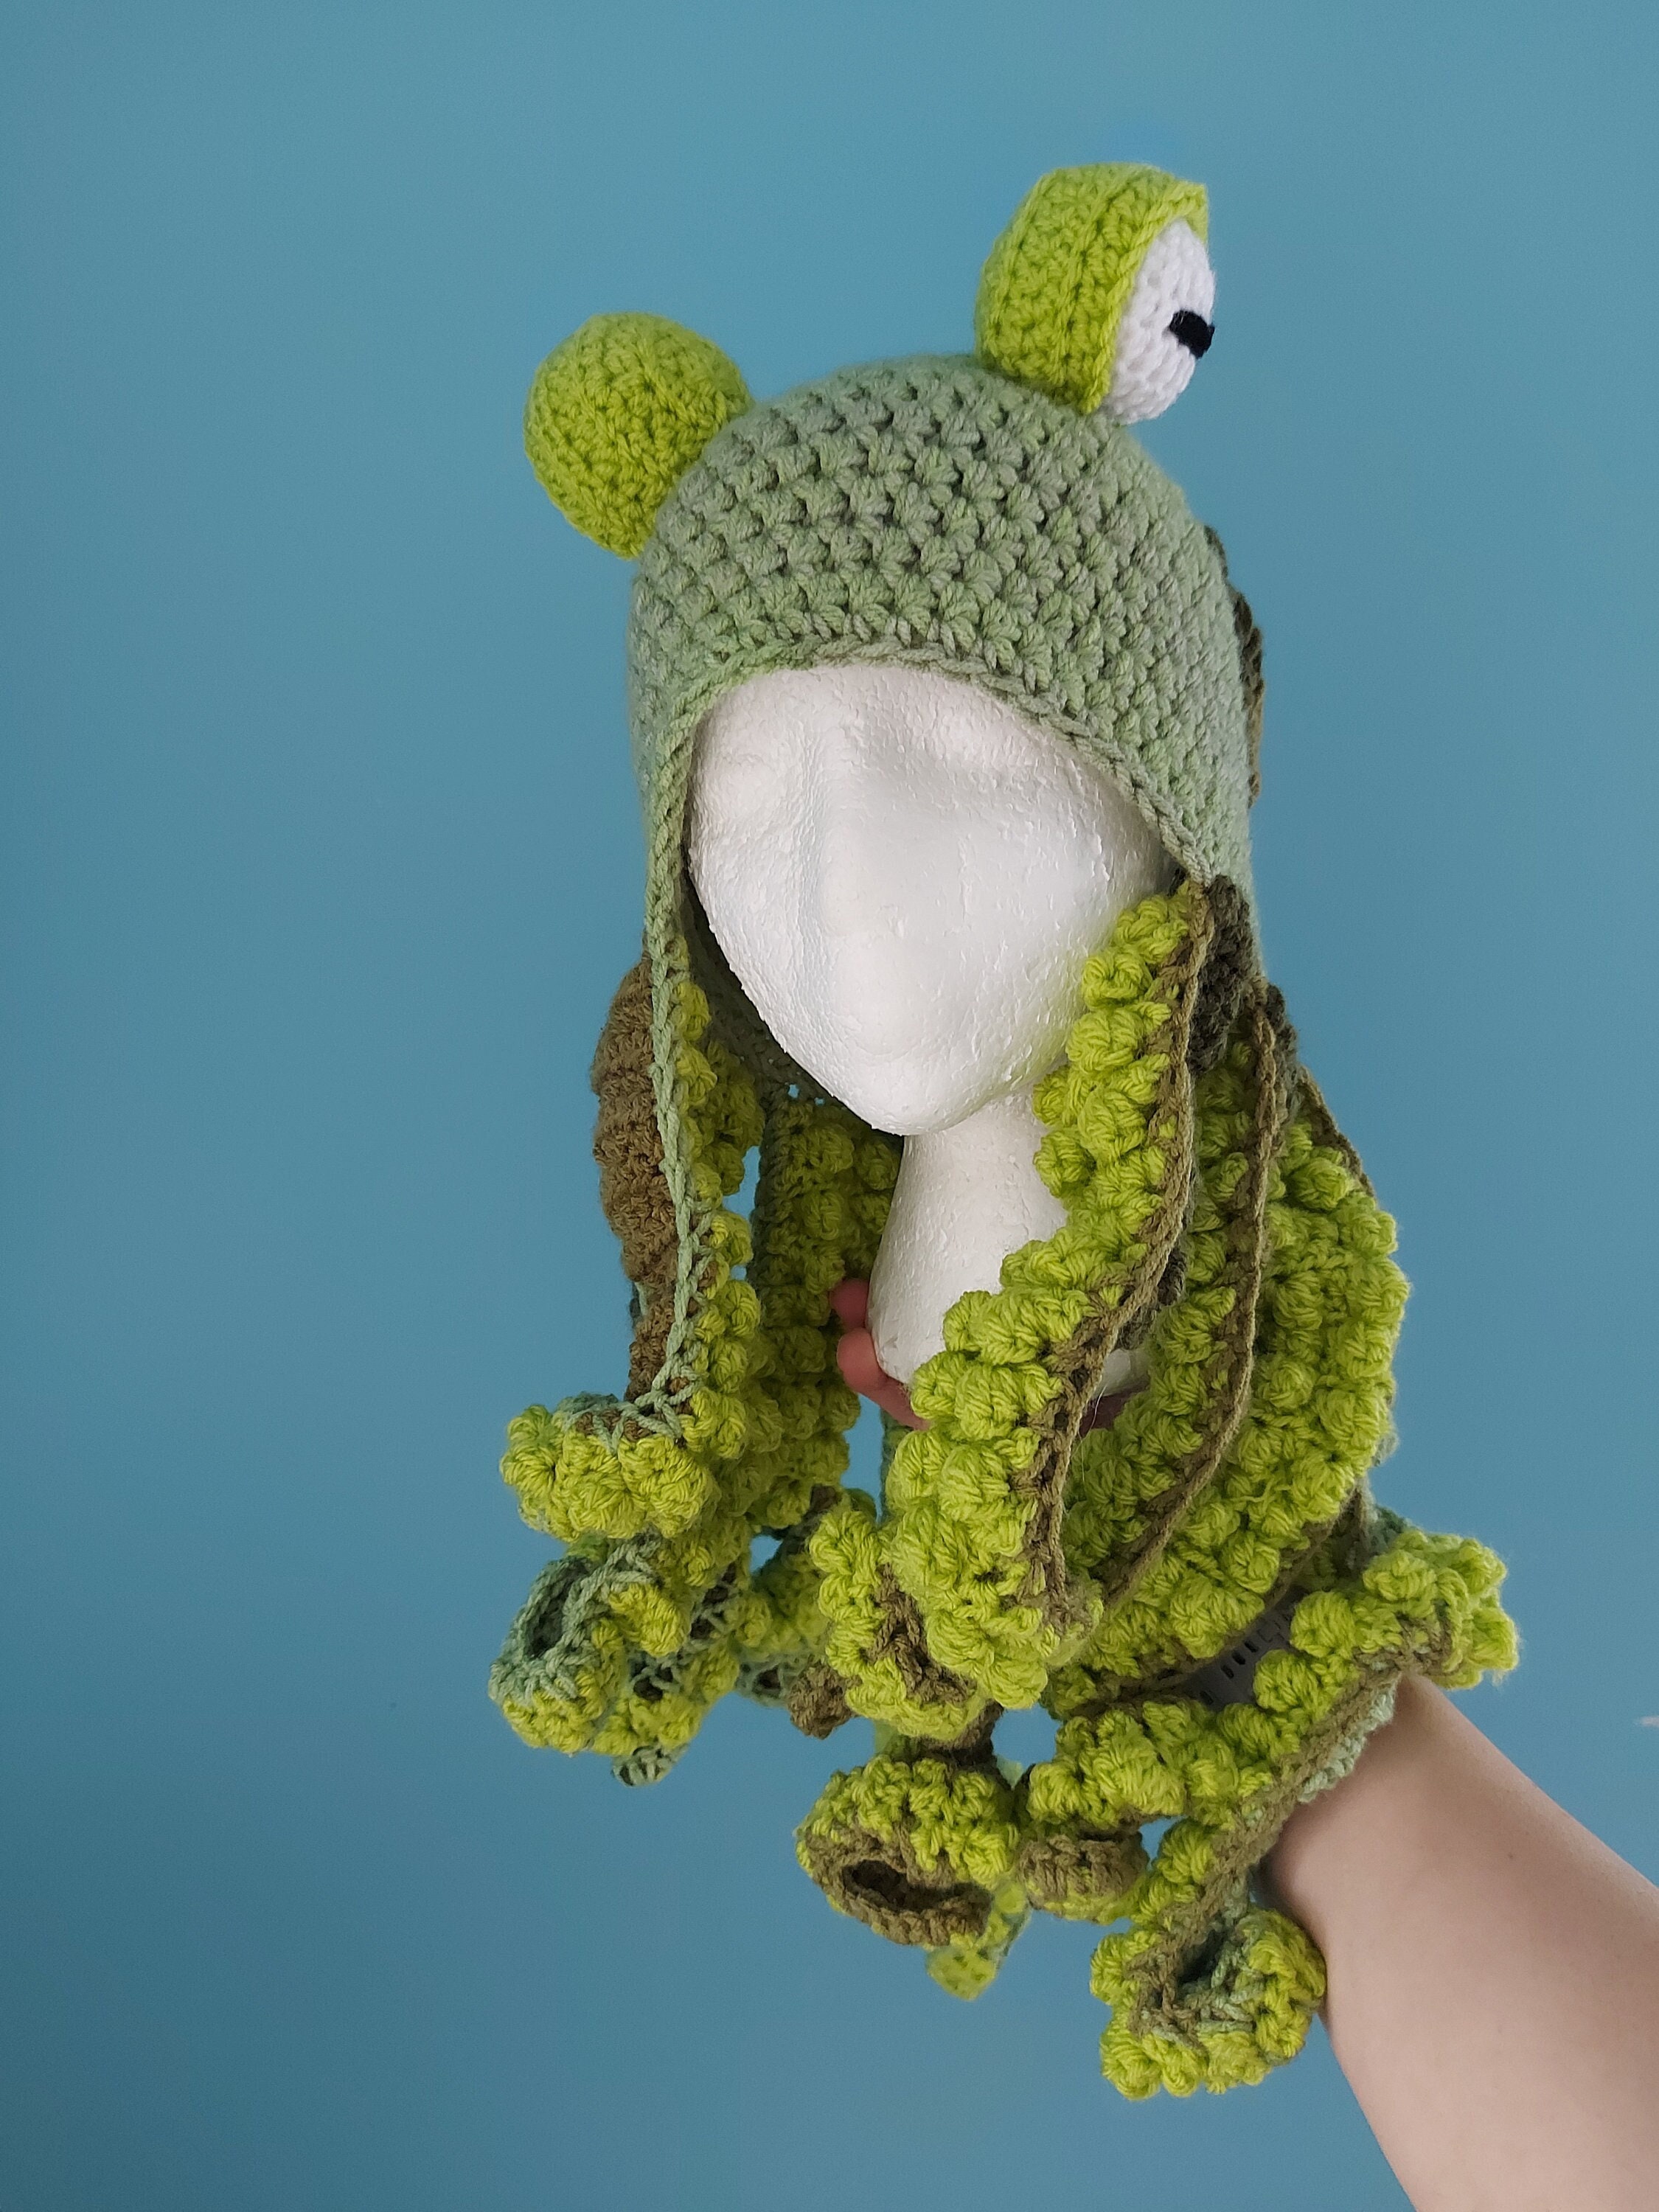 The Retro Striped Twisted Kraken Octopus Hat Crochet Made 